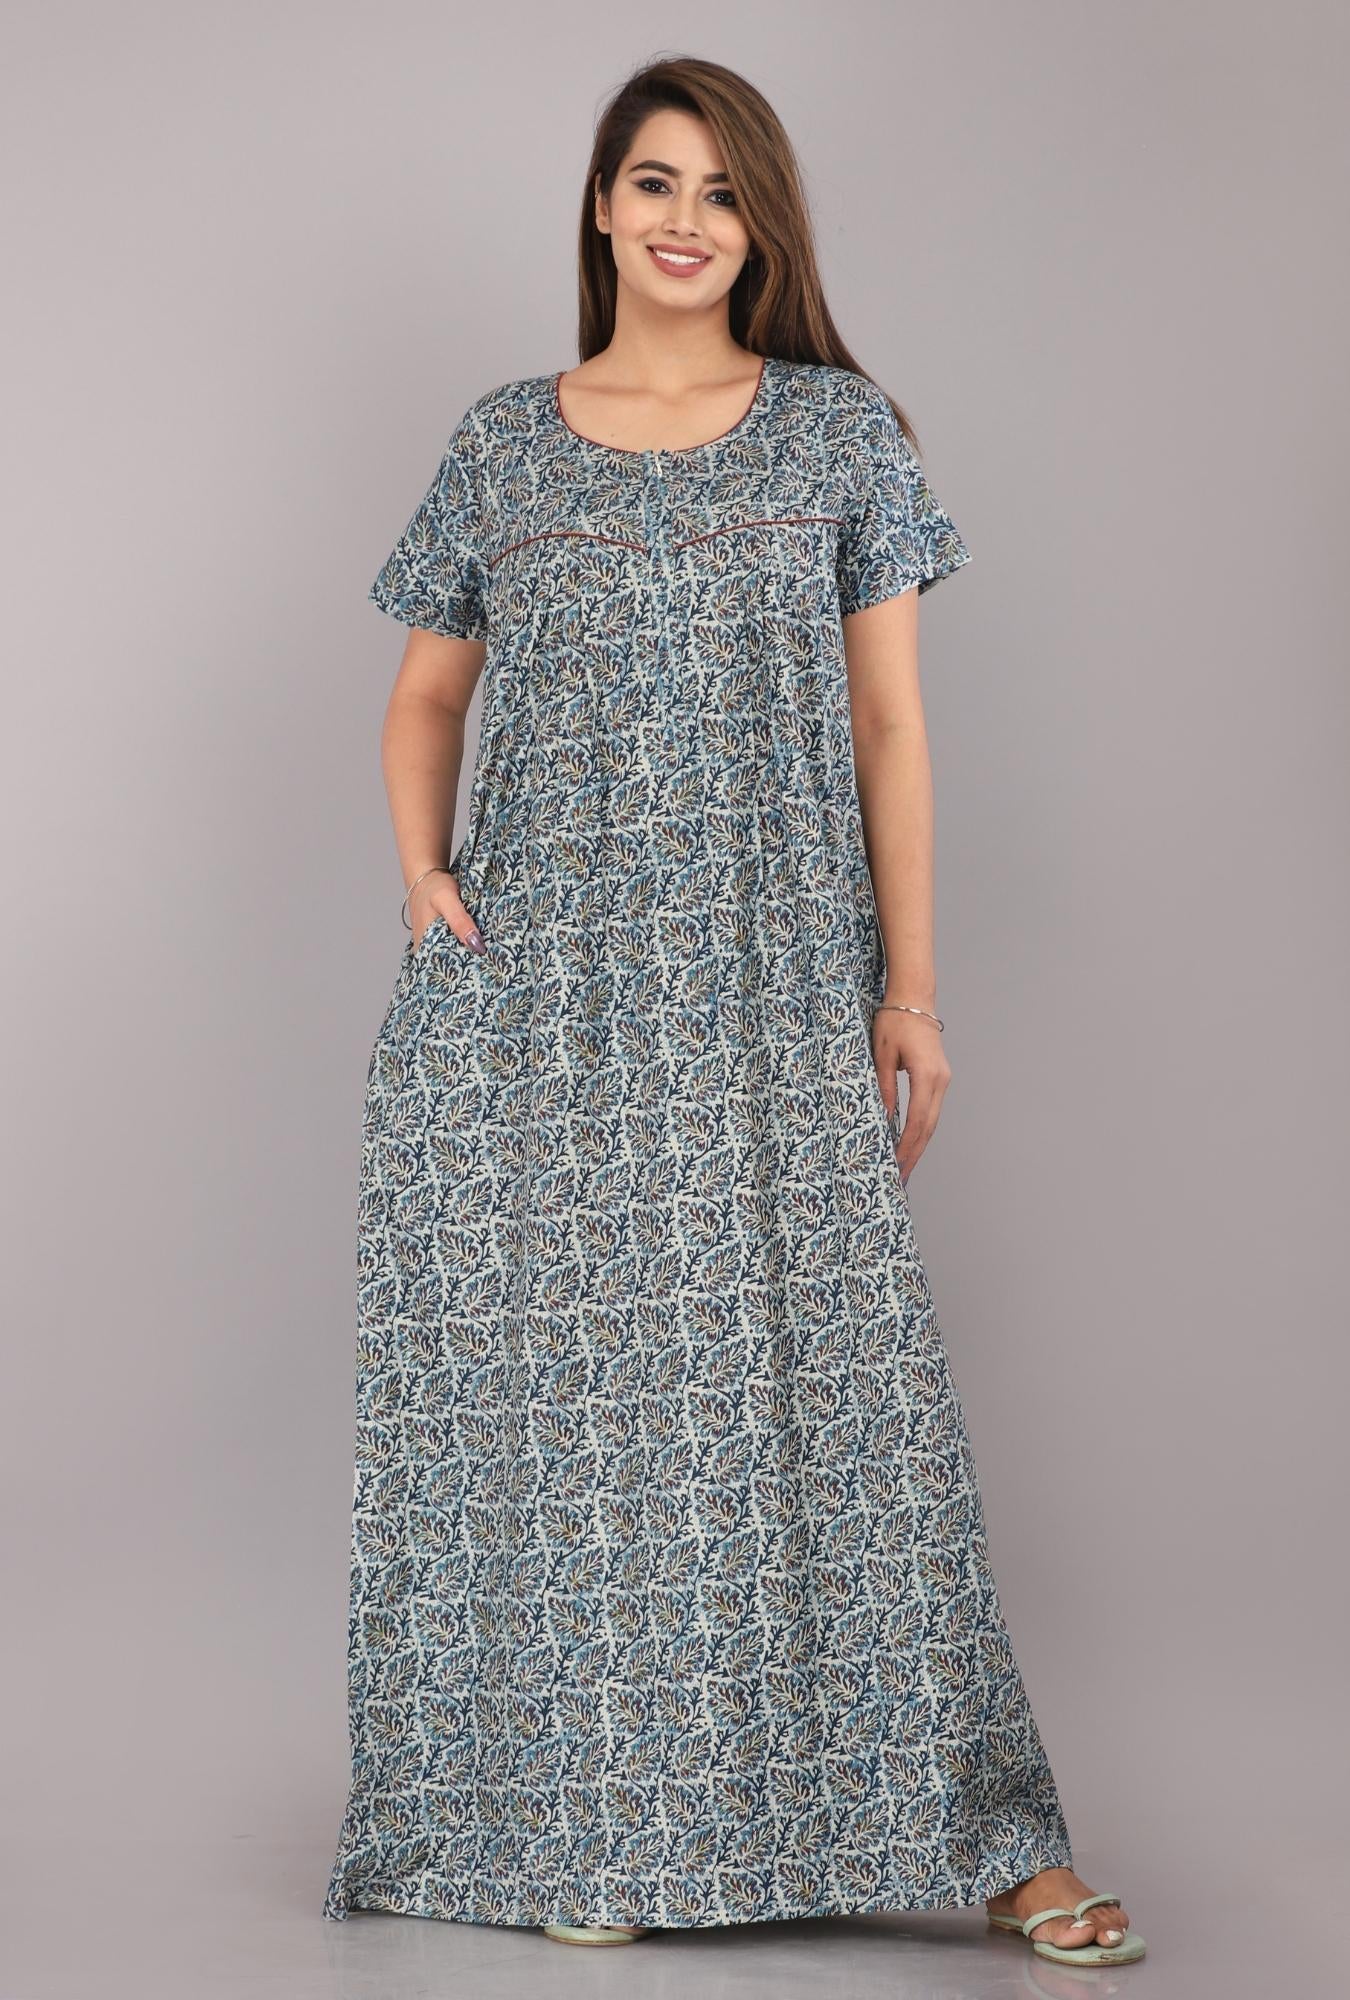 Betel Leaf Blue Cotton Printed Nightwear Gowns